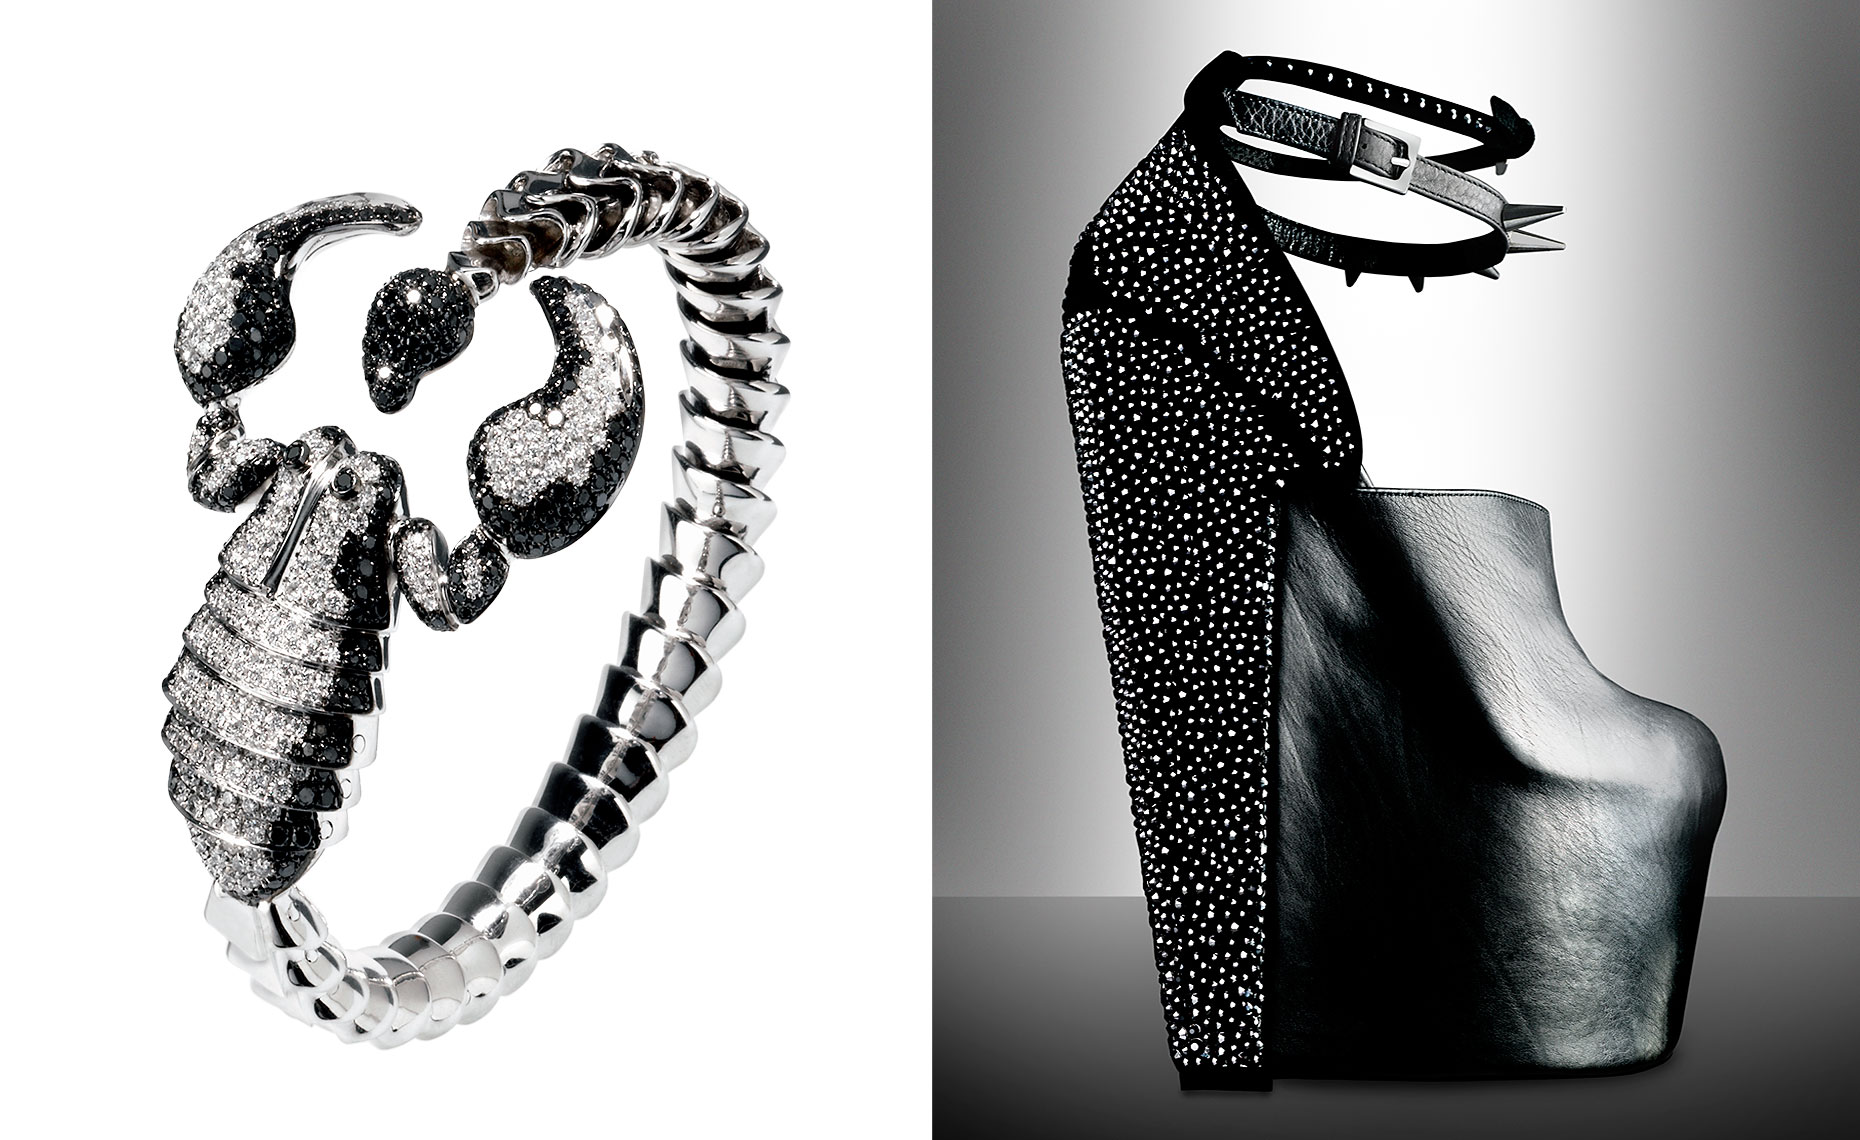  Roberto Coin Scorpion diamond bracelet and Ruthie Davis Swarovski crystal embellished platform shoe